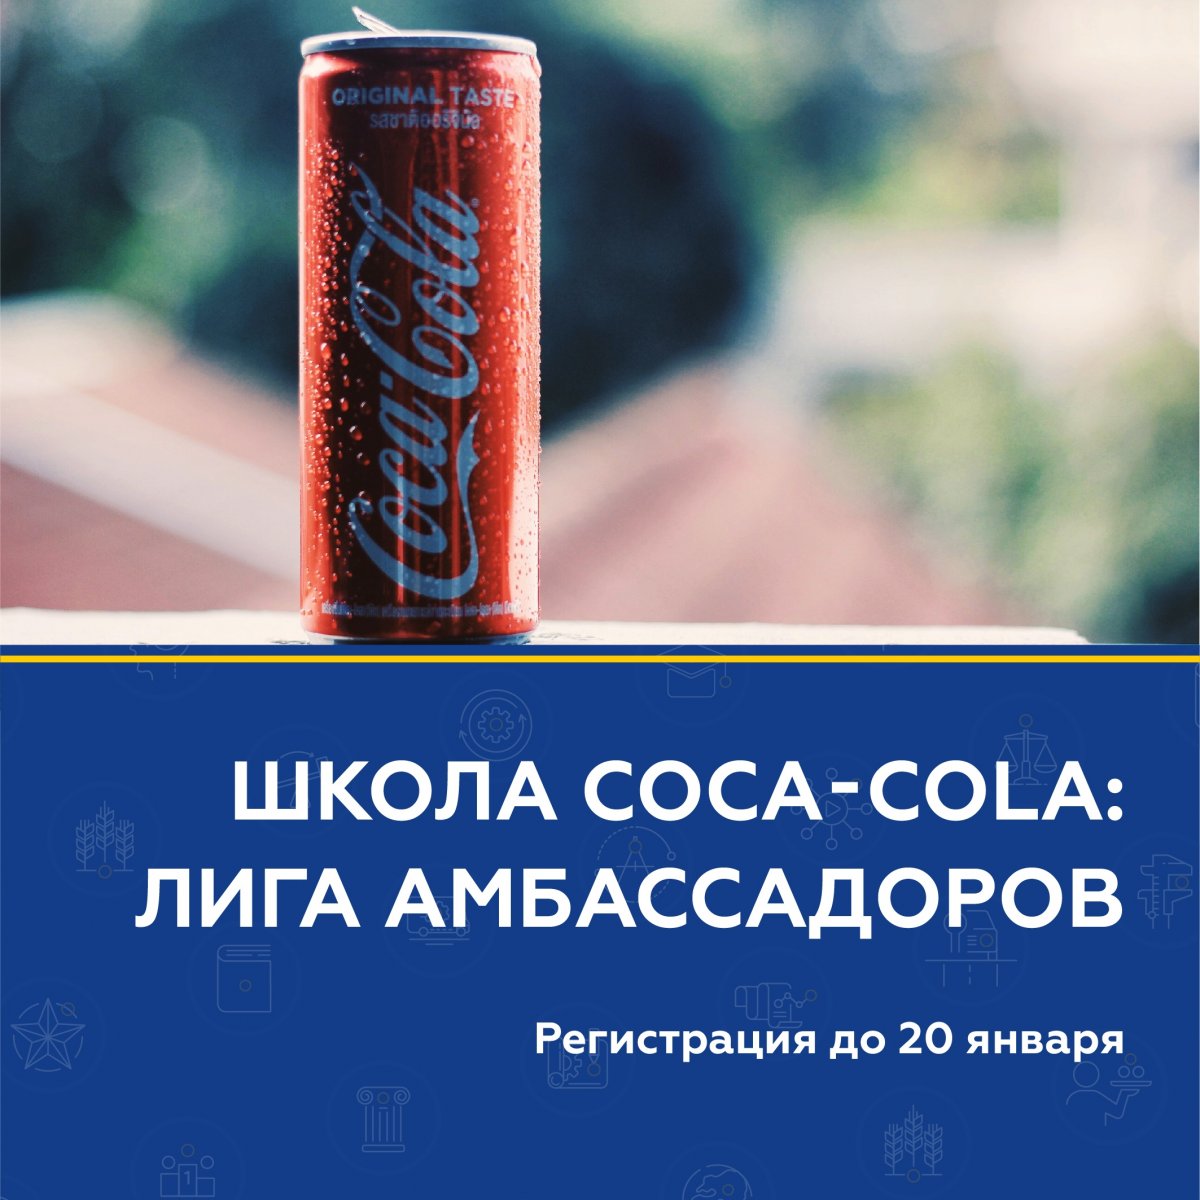 Coca-Cola HBC Россия продлевает набор на программу «Школа Coca-Cola: Лига амбассадоров»!⚡